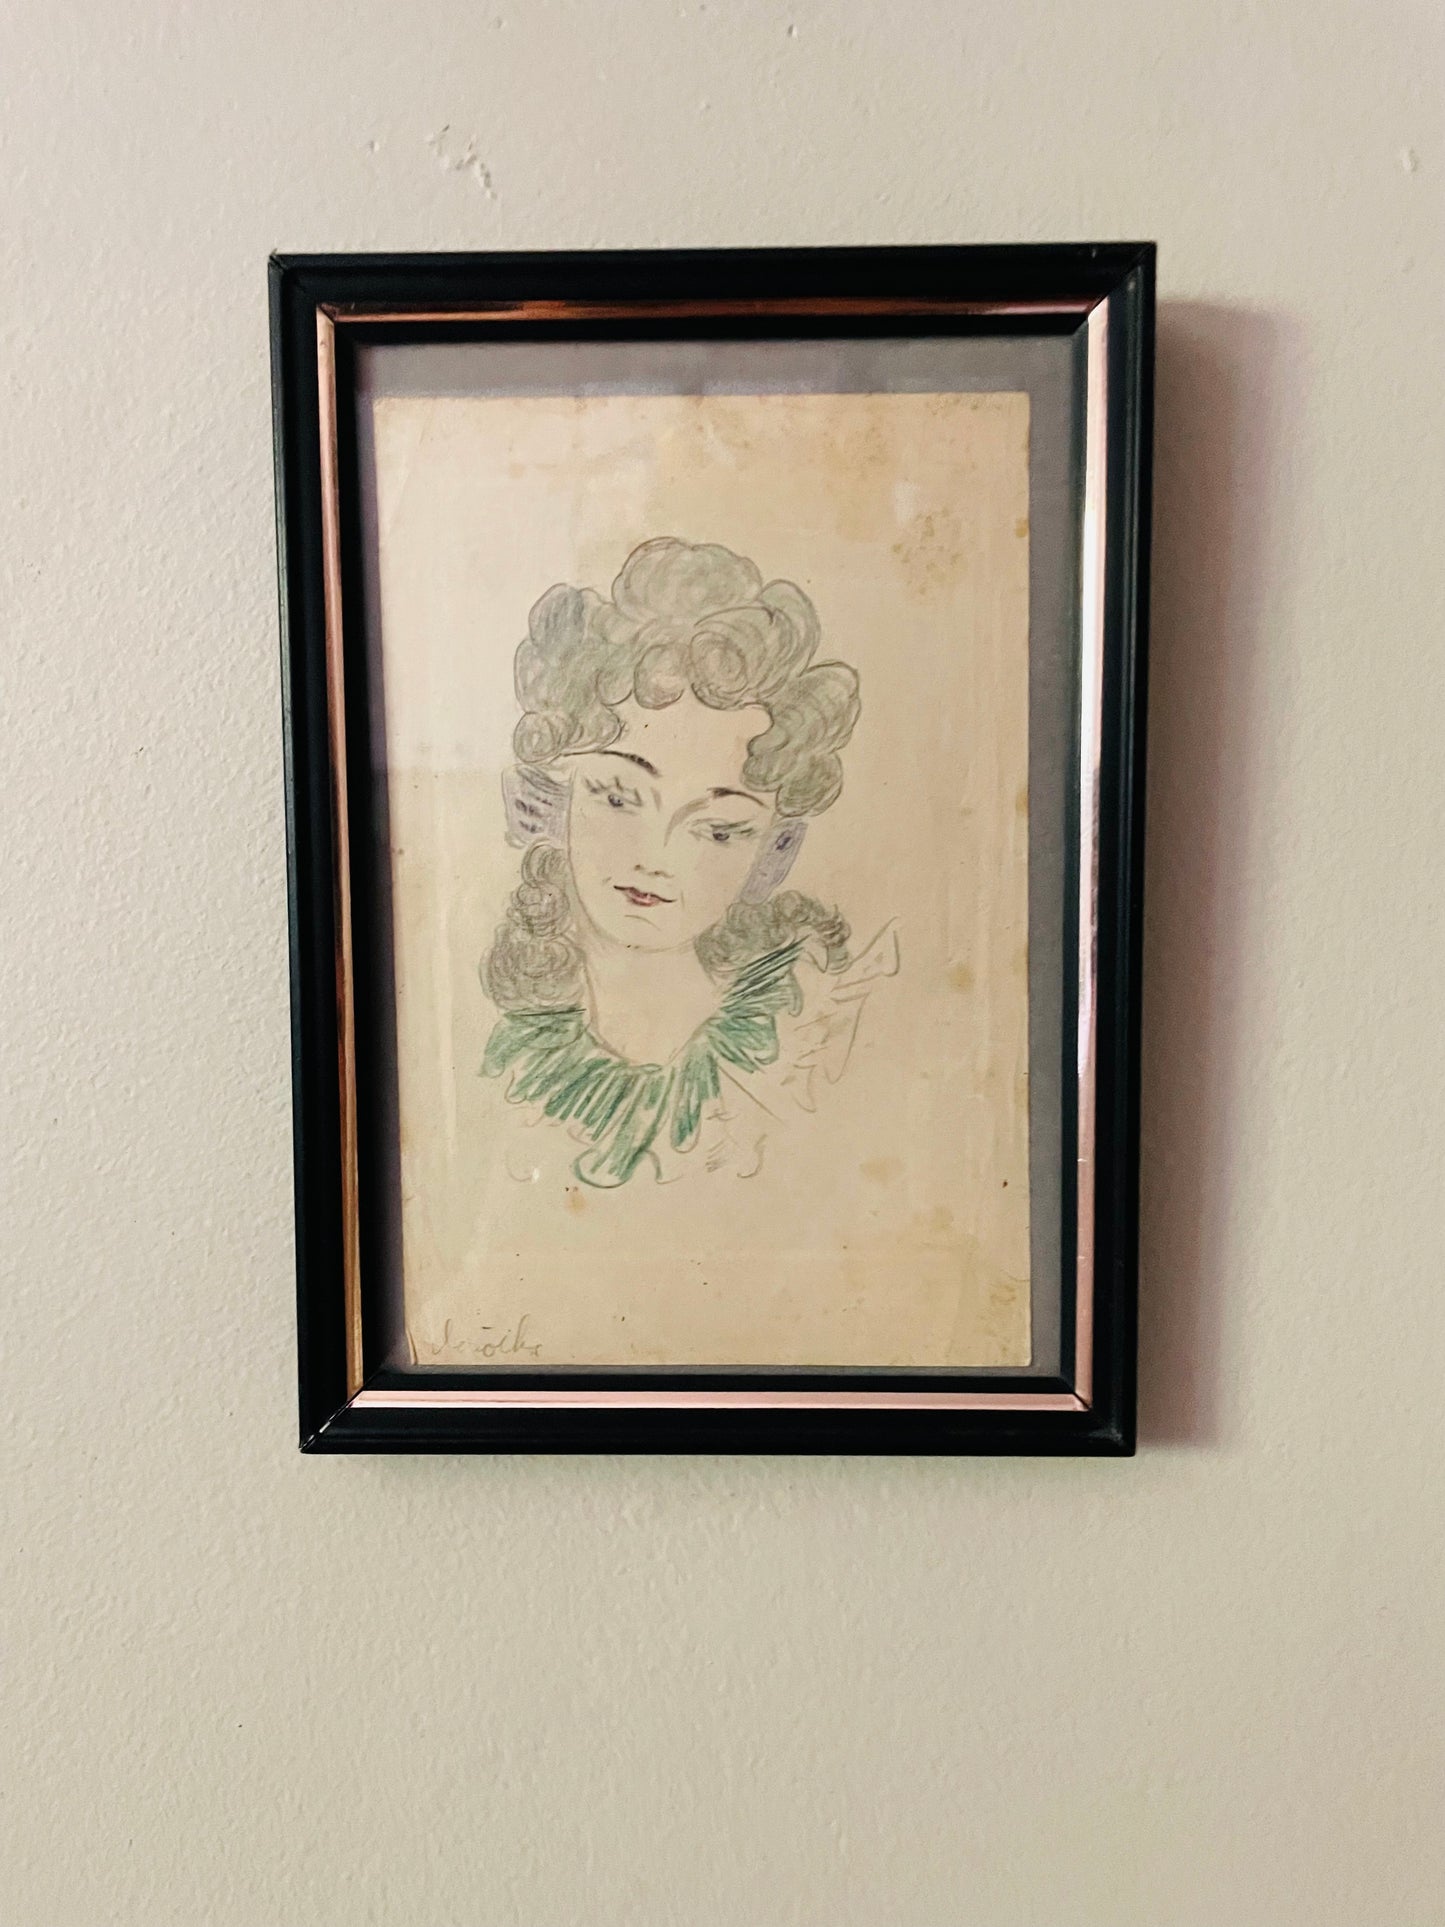 Original Art - Framed Sketch Portrait Picture of Woman - Signed